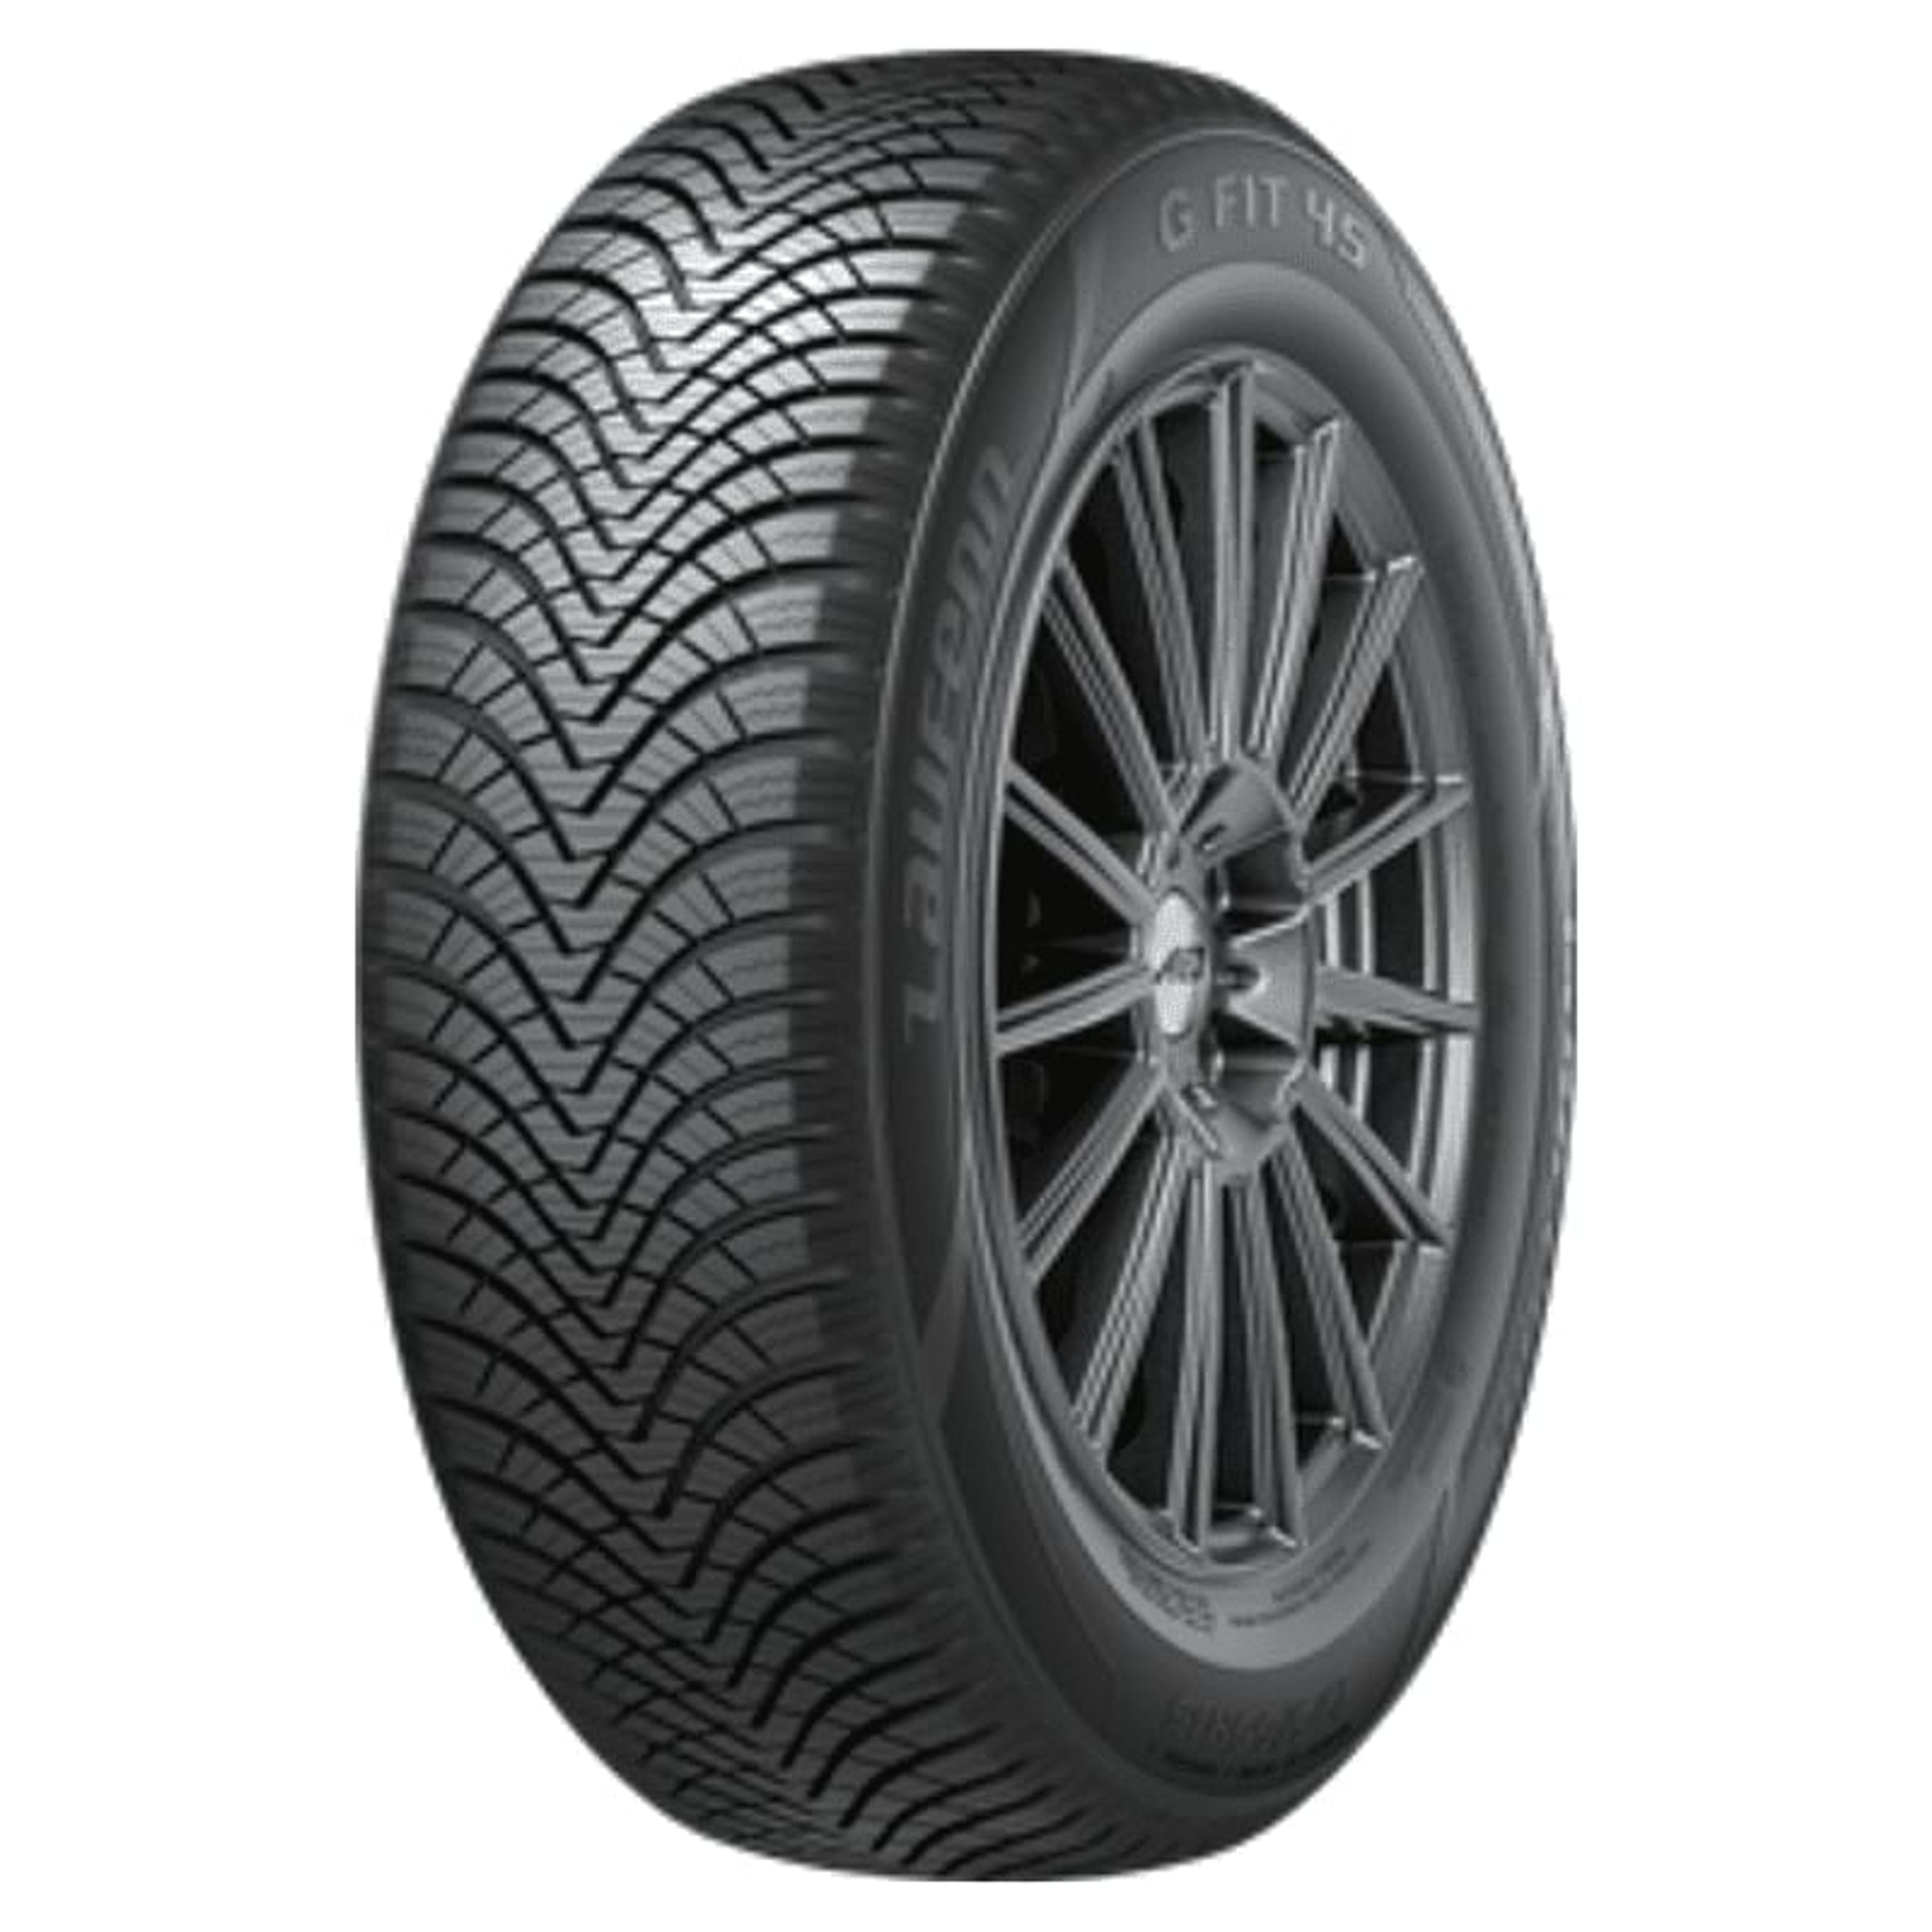 Buy Laufenn SimpleTire | Online 4S Tires G FIT